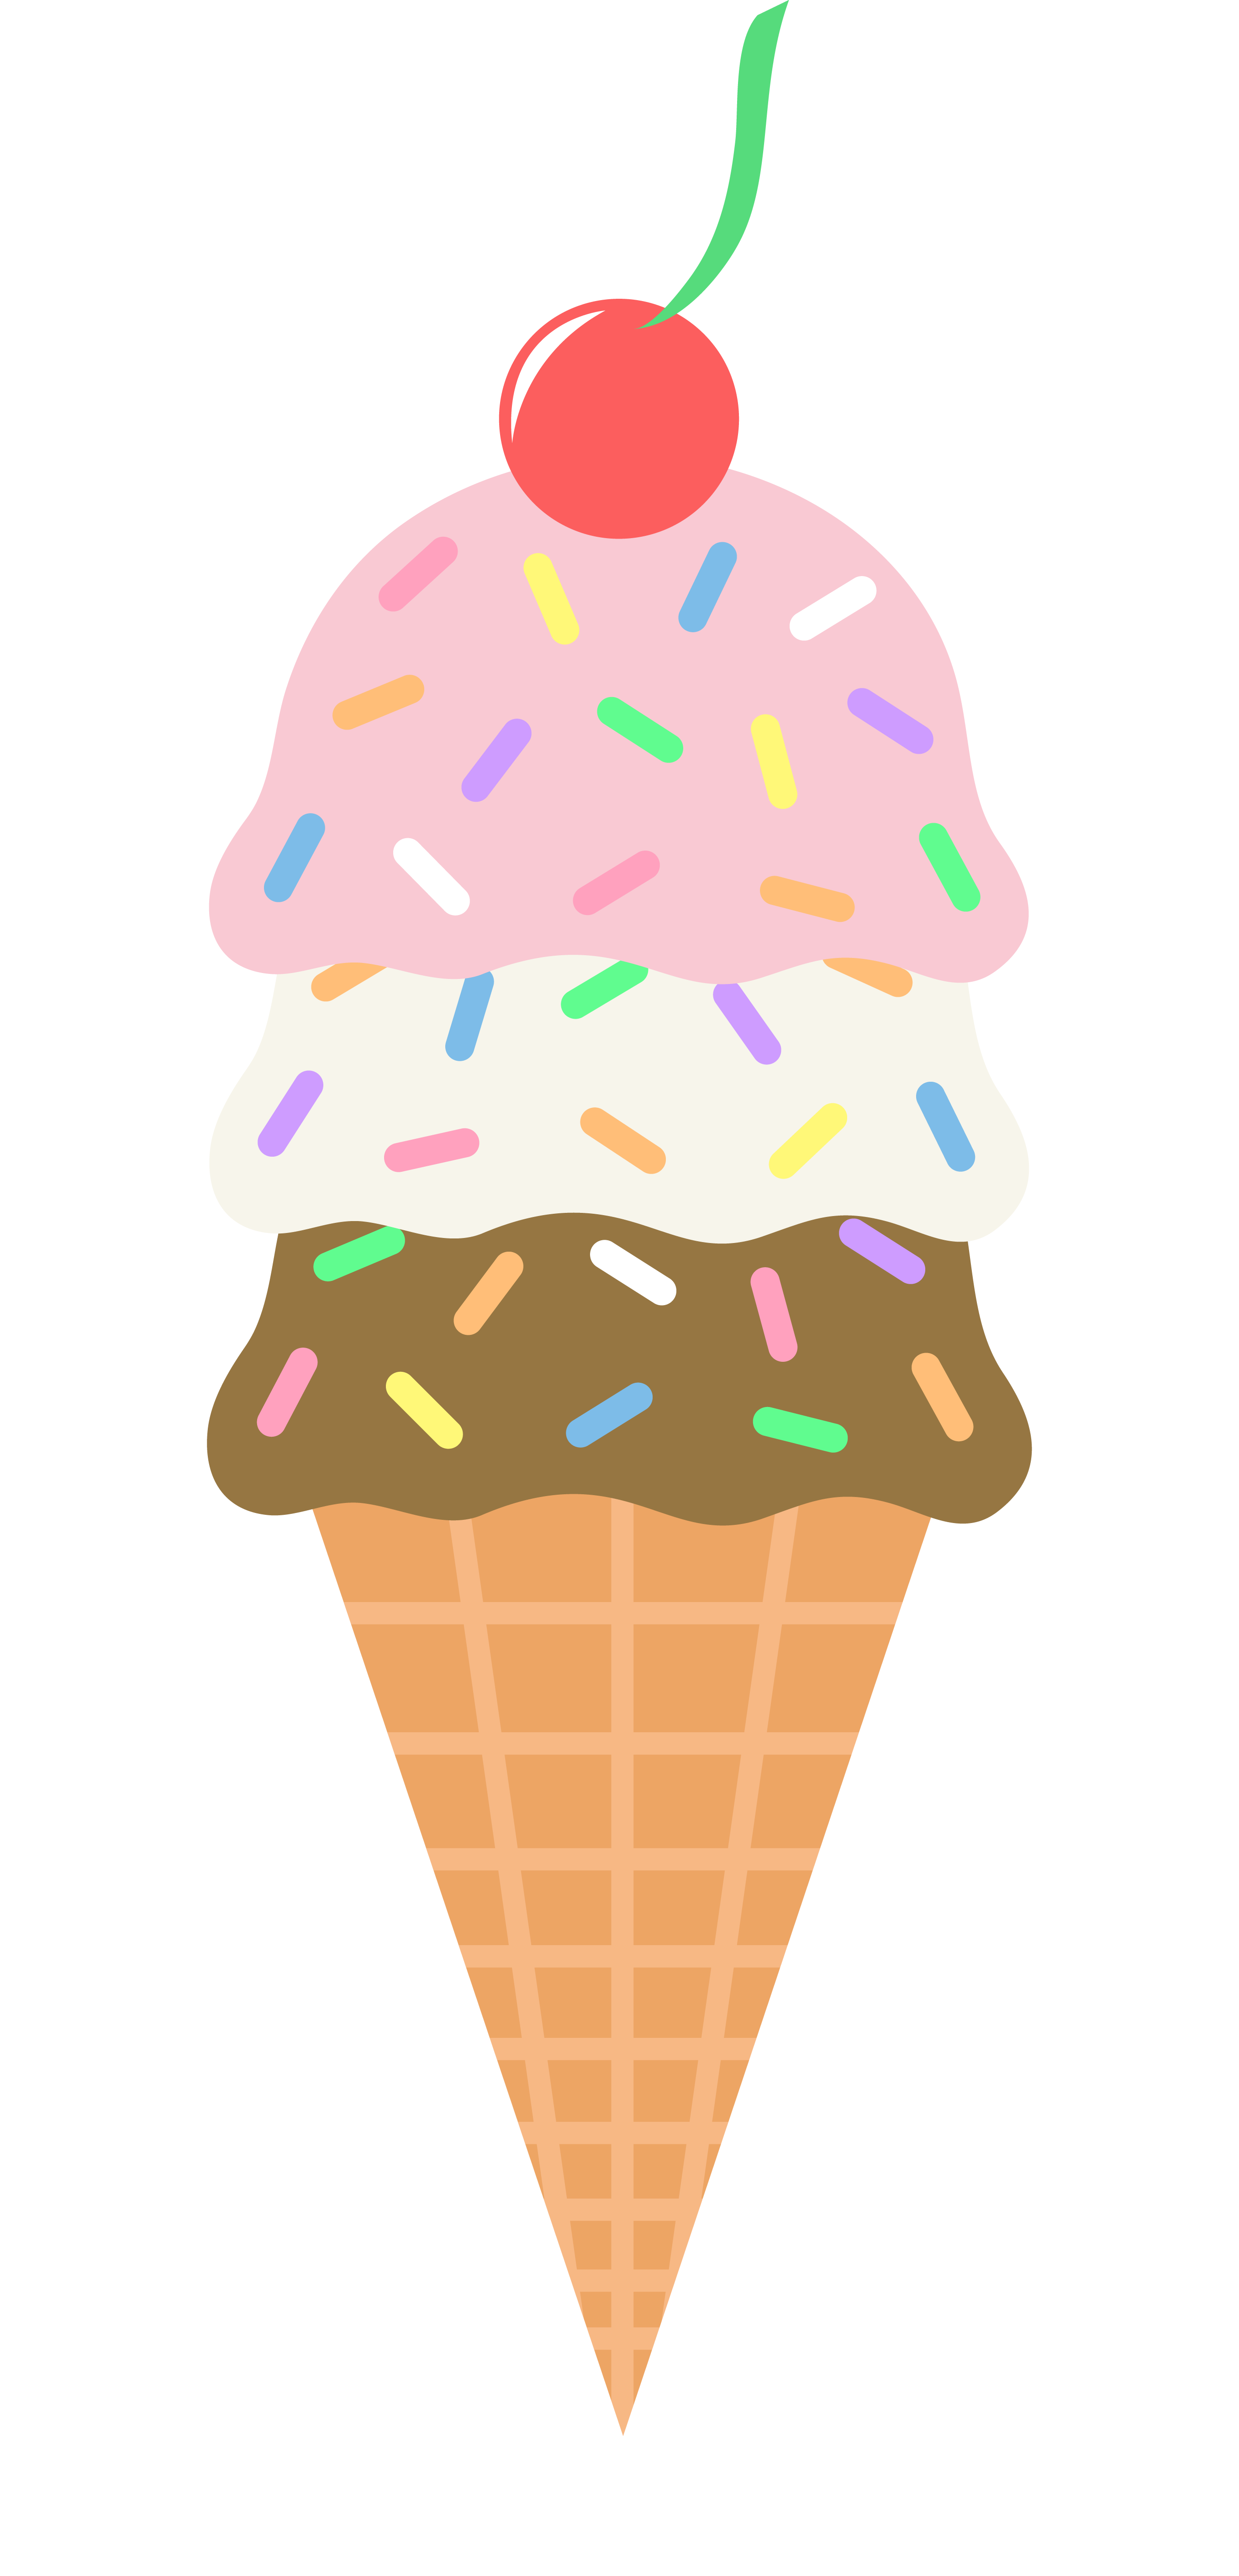 Cute Ice Cream Backgrounds Ice Cream Cone Neopolitan Sprinkles Cherry    